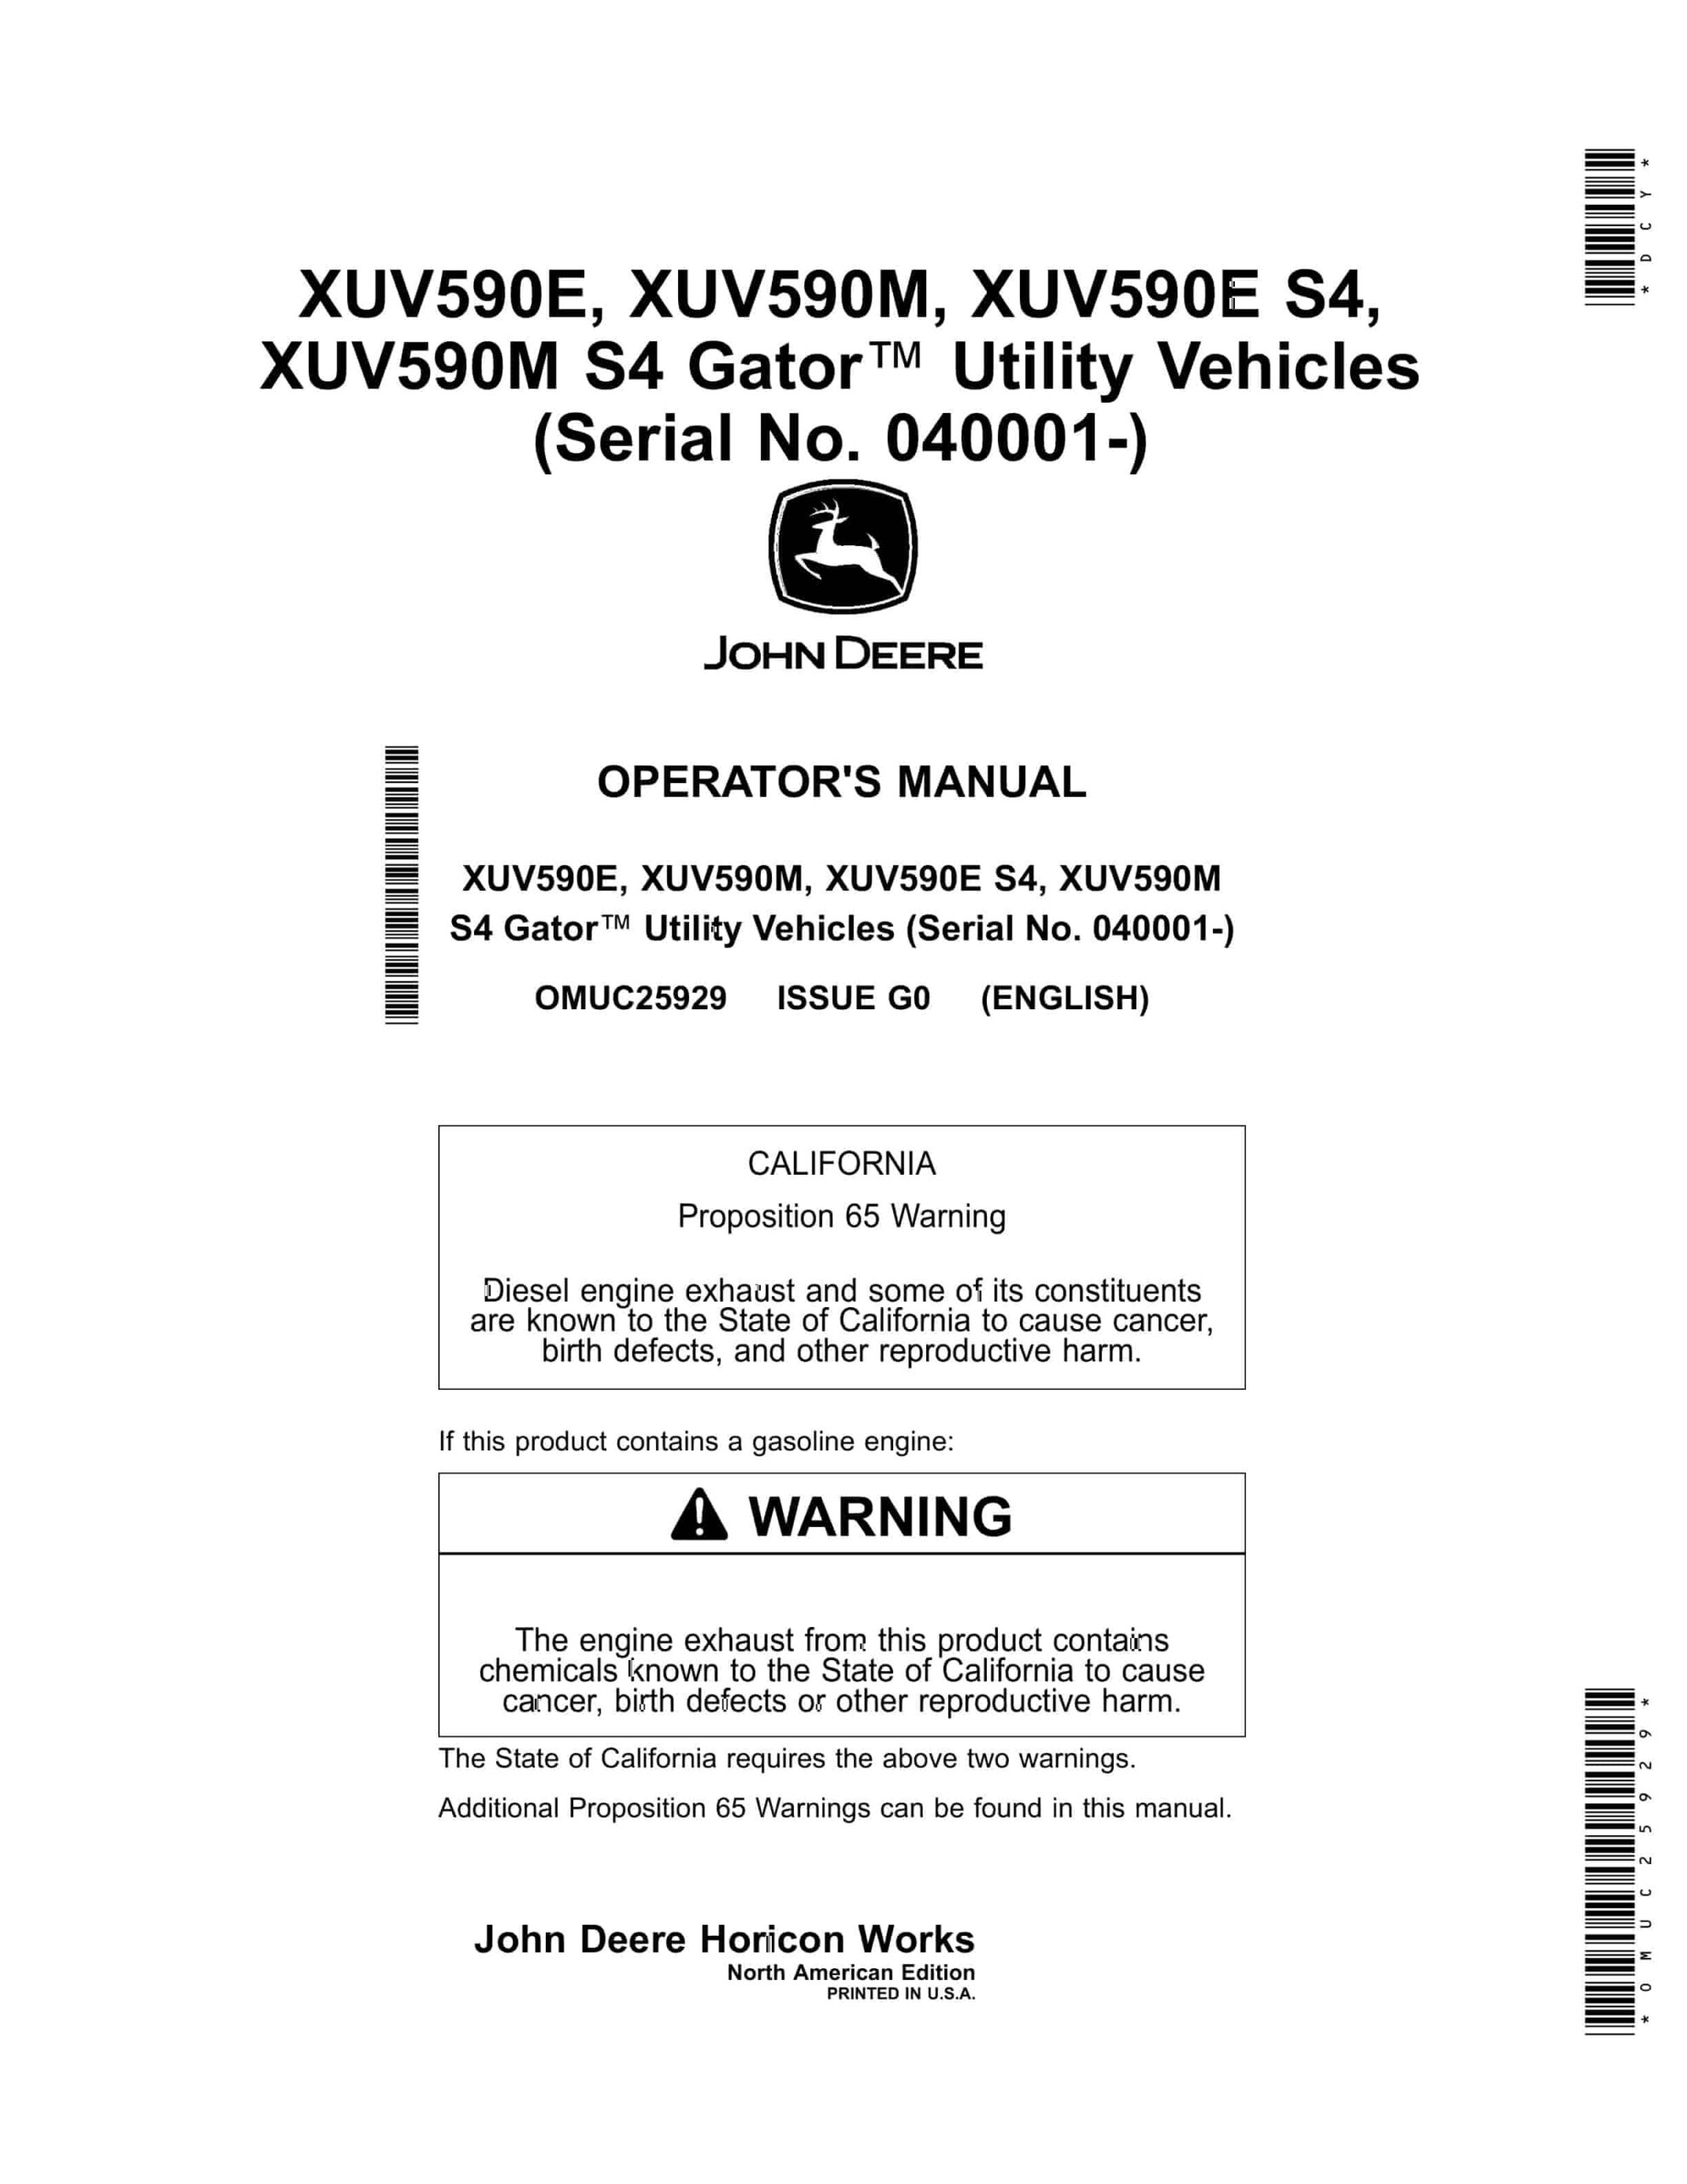 John Deere XUV590E, XUV590M, XUV590E S4, XUV590M S4 Gator Utility Vehicles Operator Manual OMUC25929-1